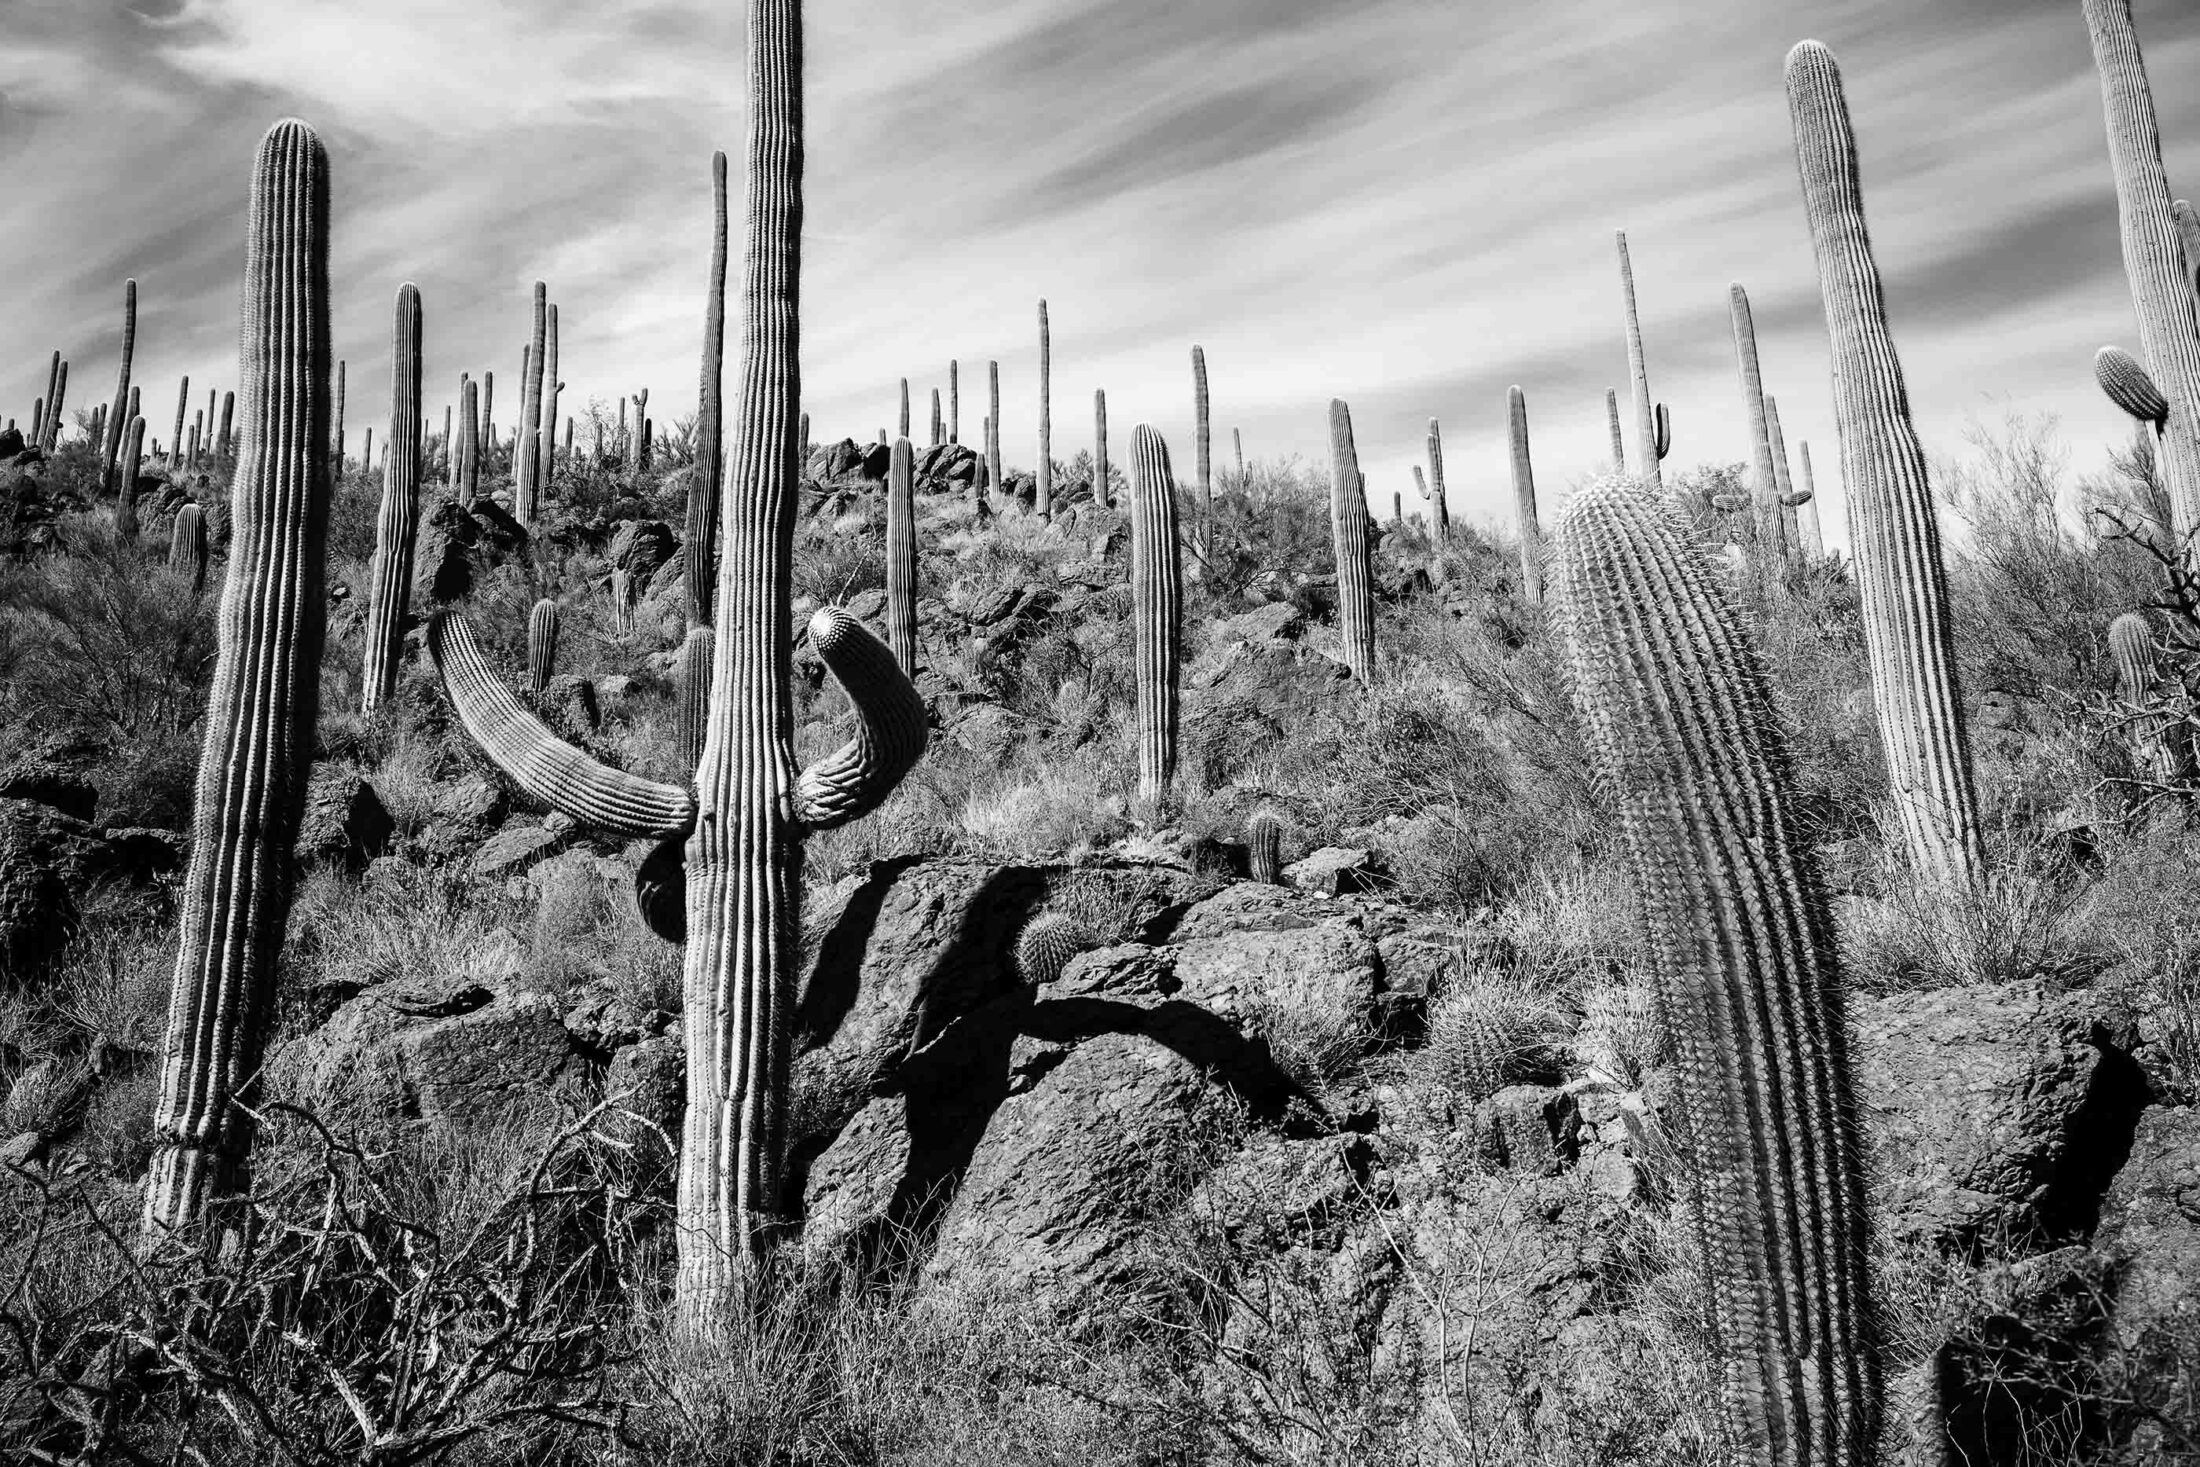 Green cactus, Cactaceae Saguaro Drawing, Arizona Cowboy s, hand